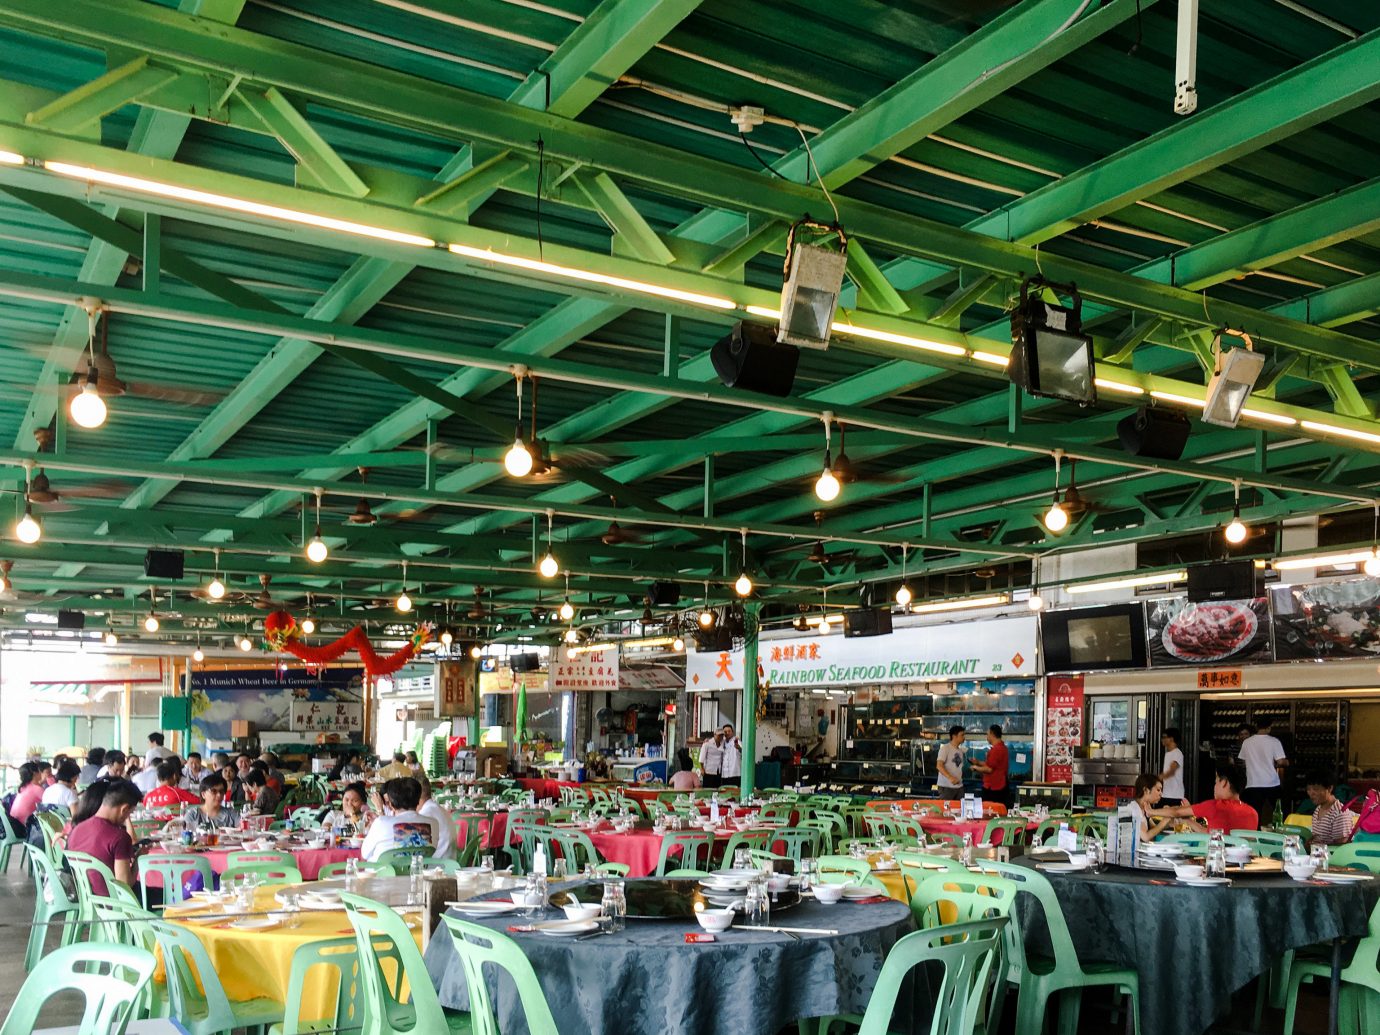 Trip Ideas indoor ceiling market marketplace function hall City leisure restaurant